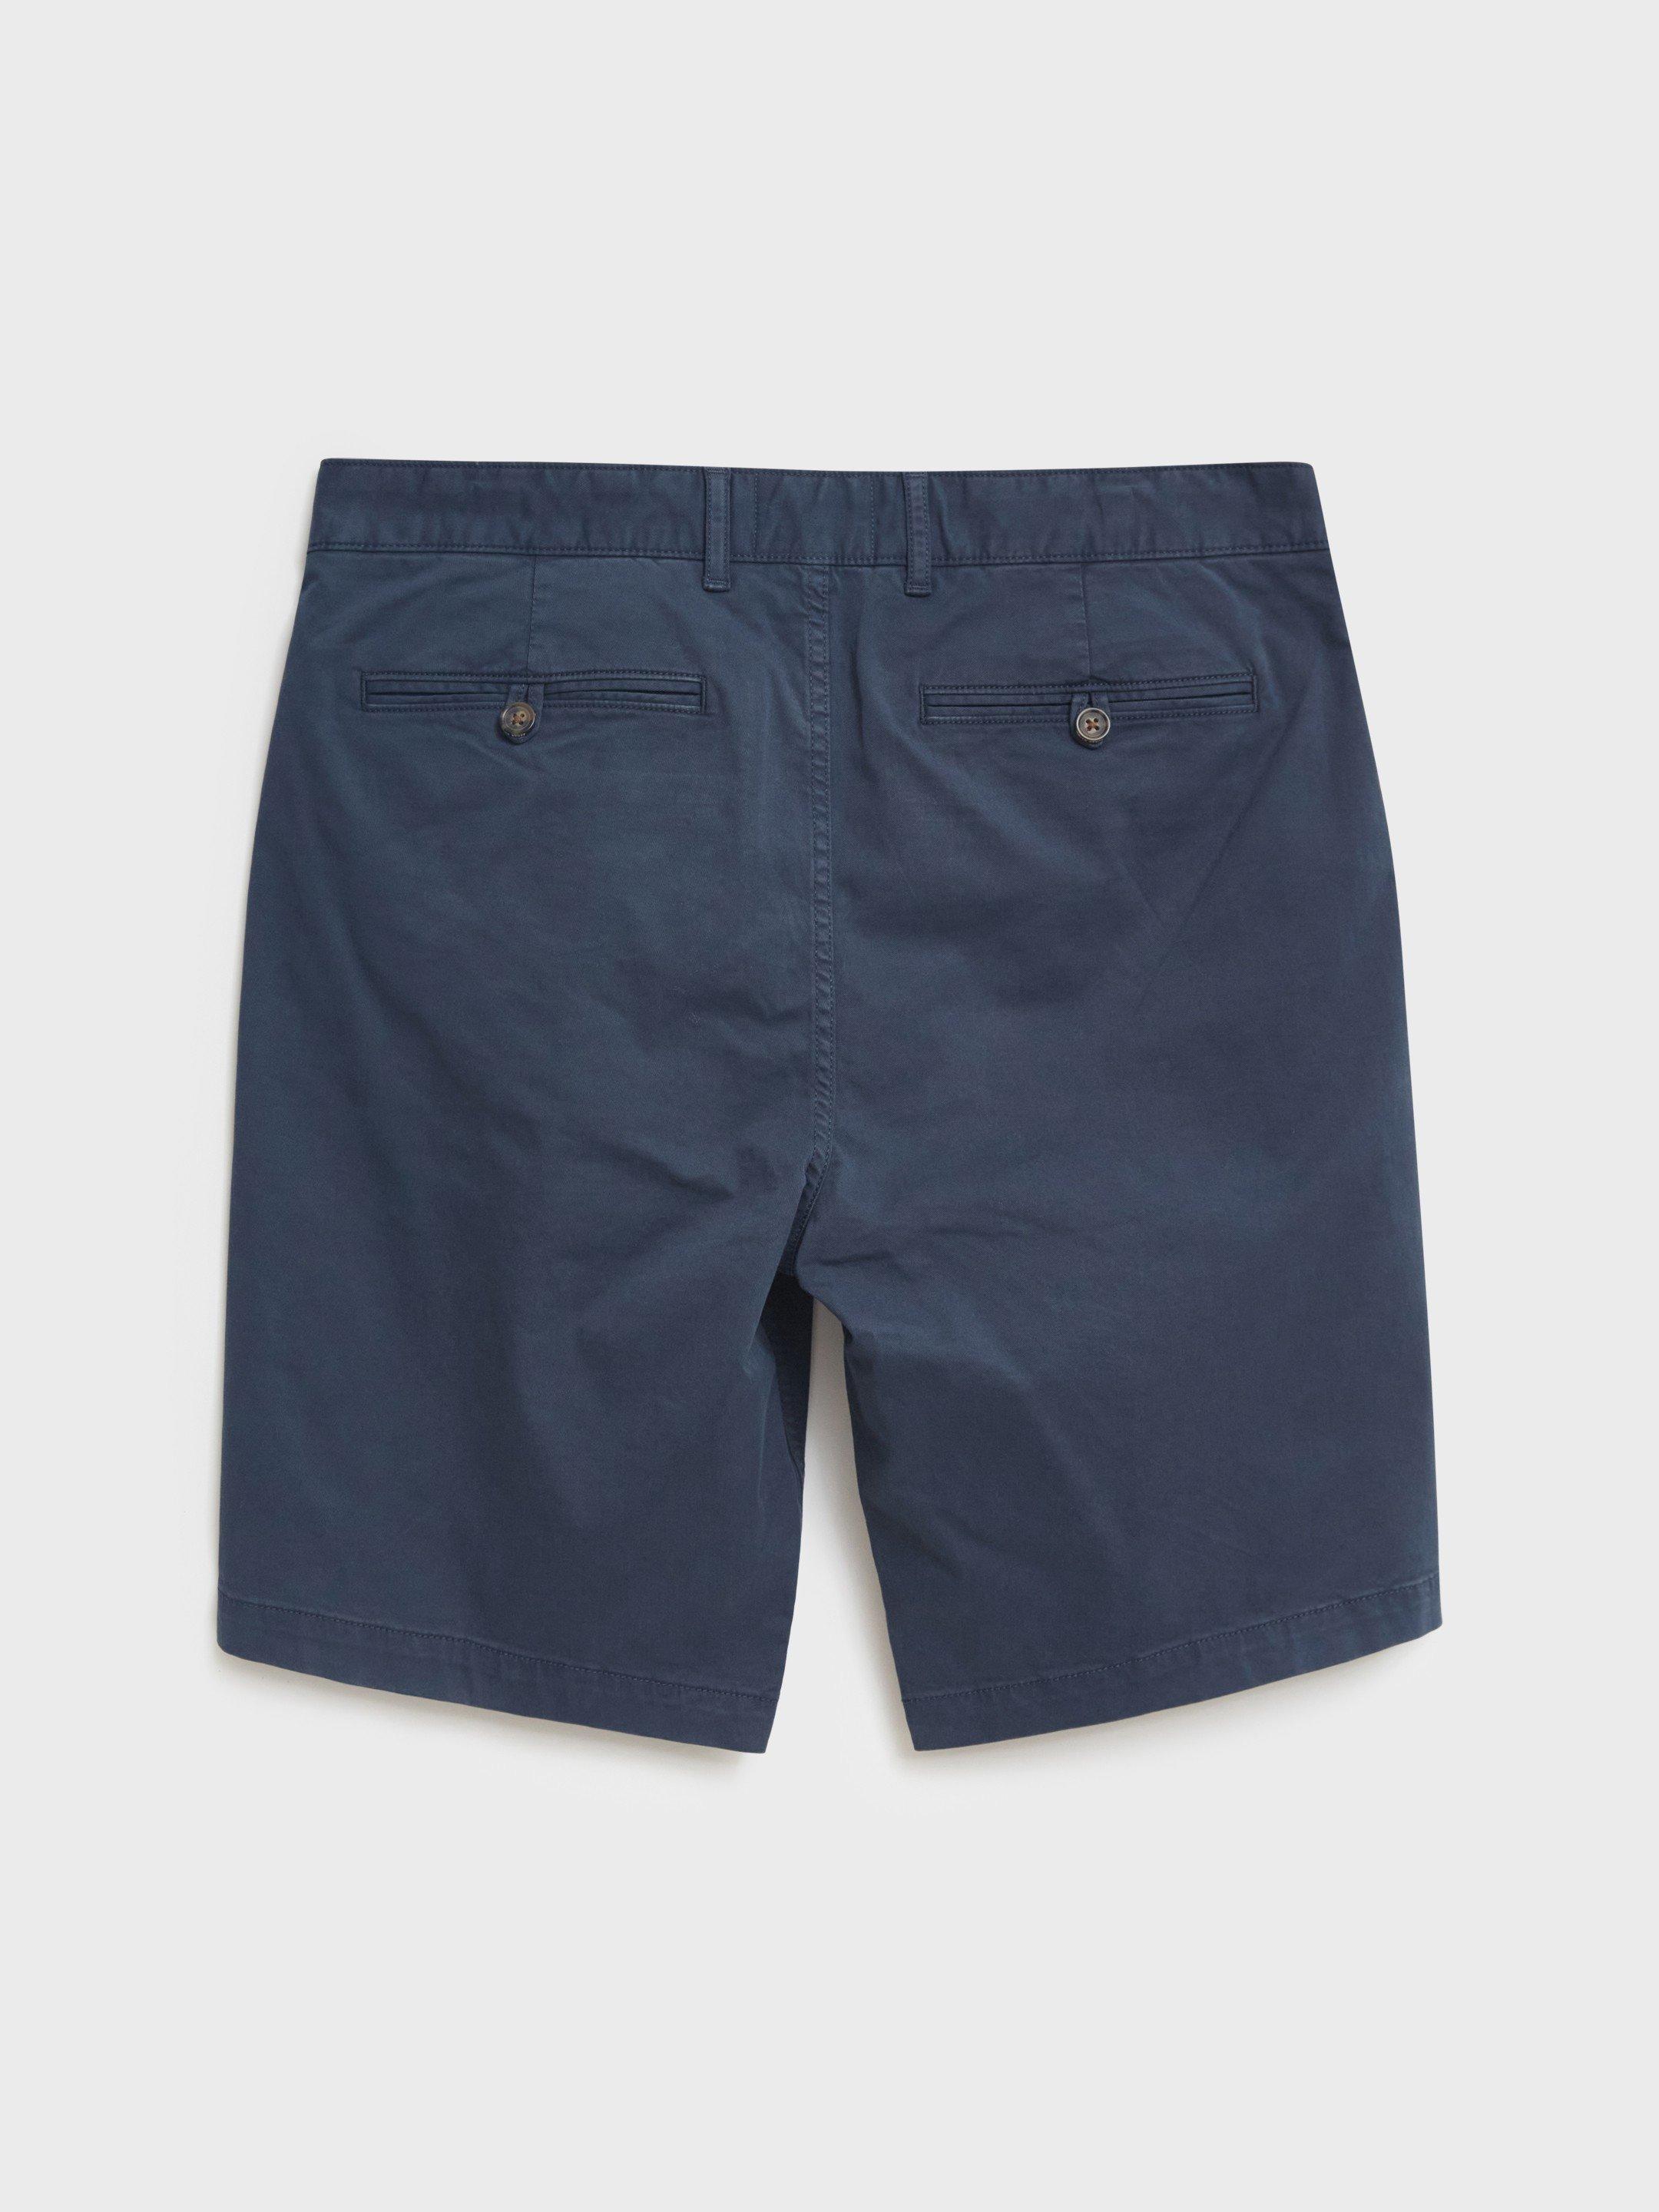 Sutton Organic Chino Shorts in DARK NAVY - FLAT BACK